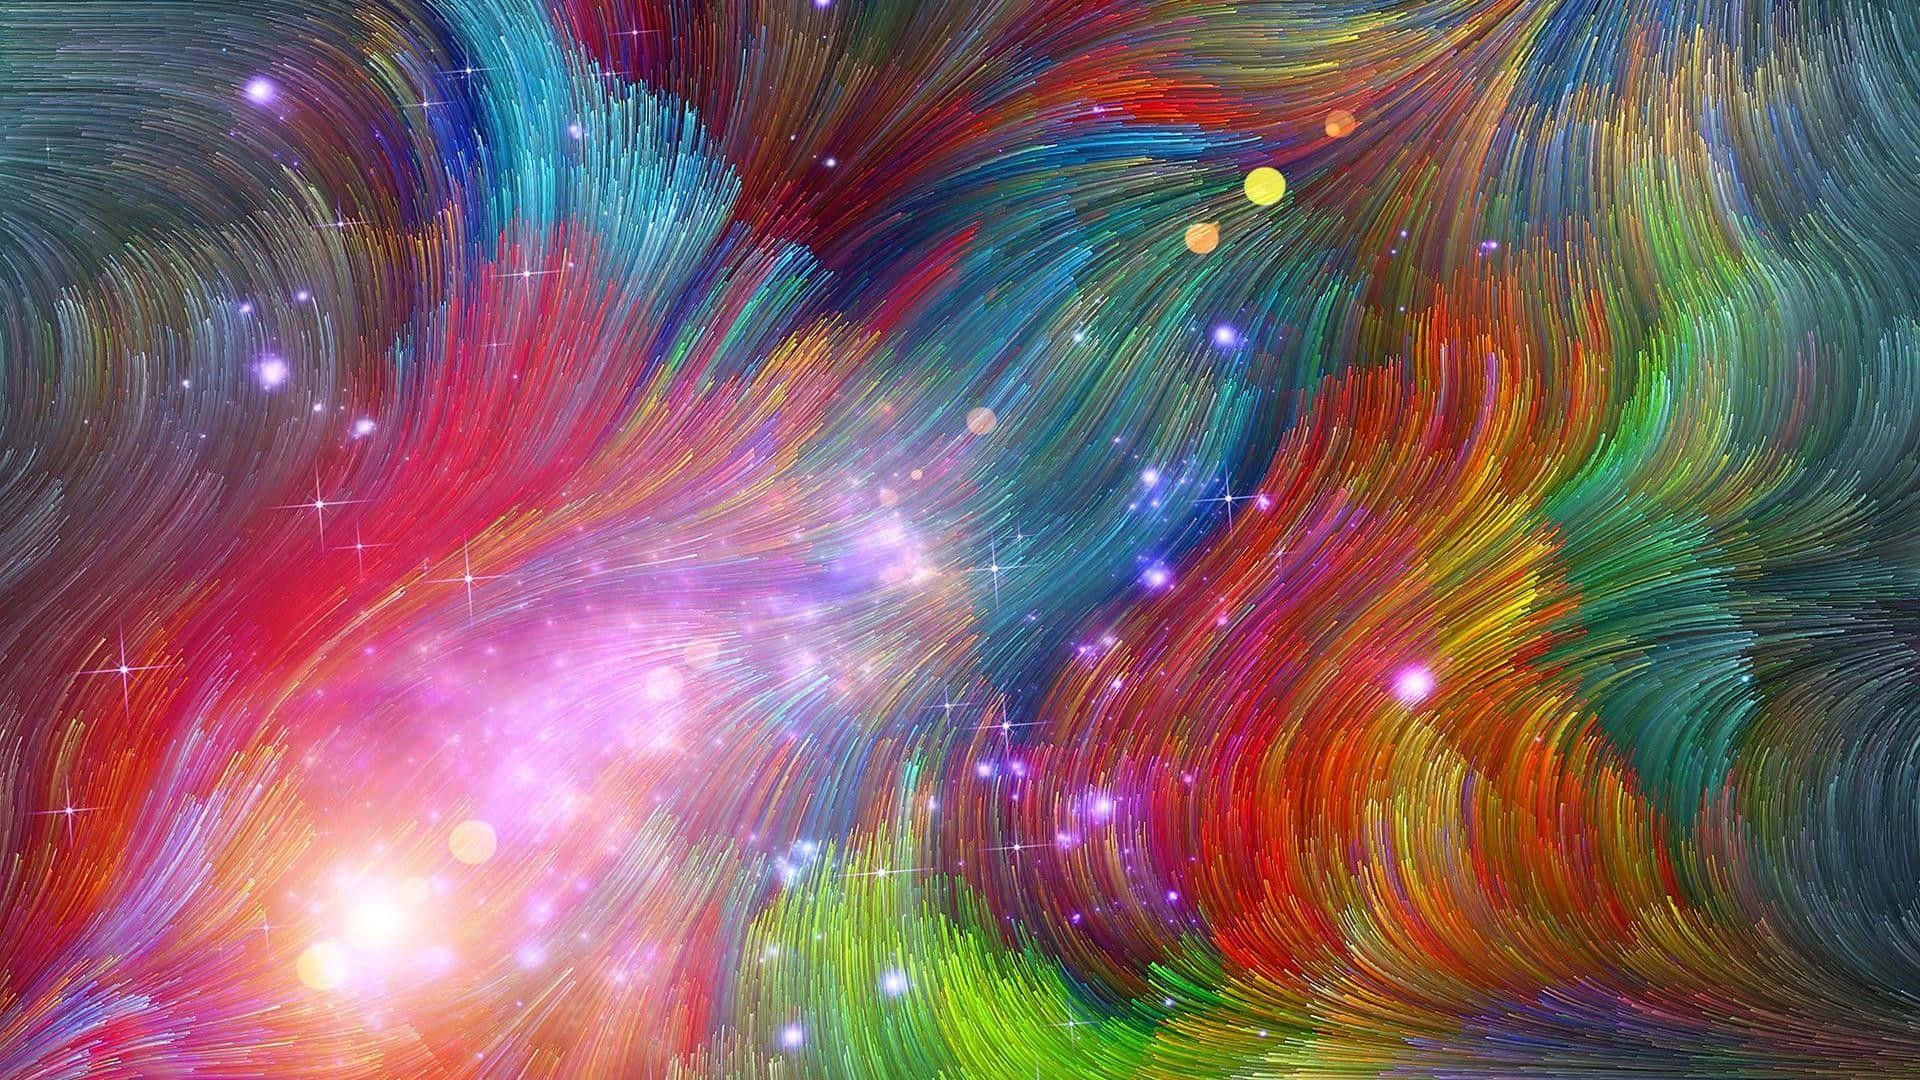 Explore the beautiful Trippy Galaxy Wallpaper